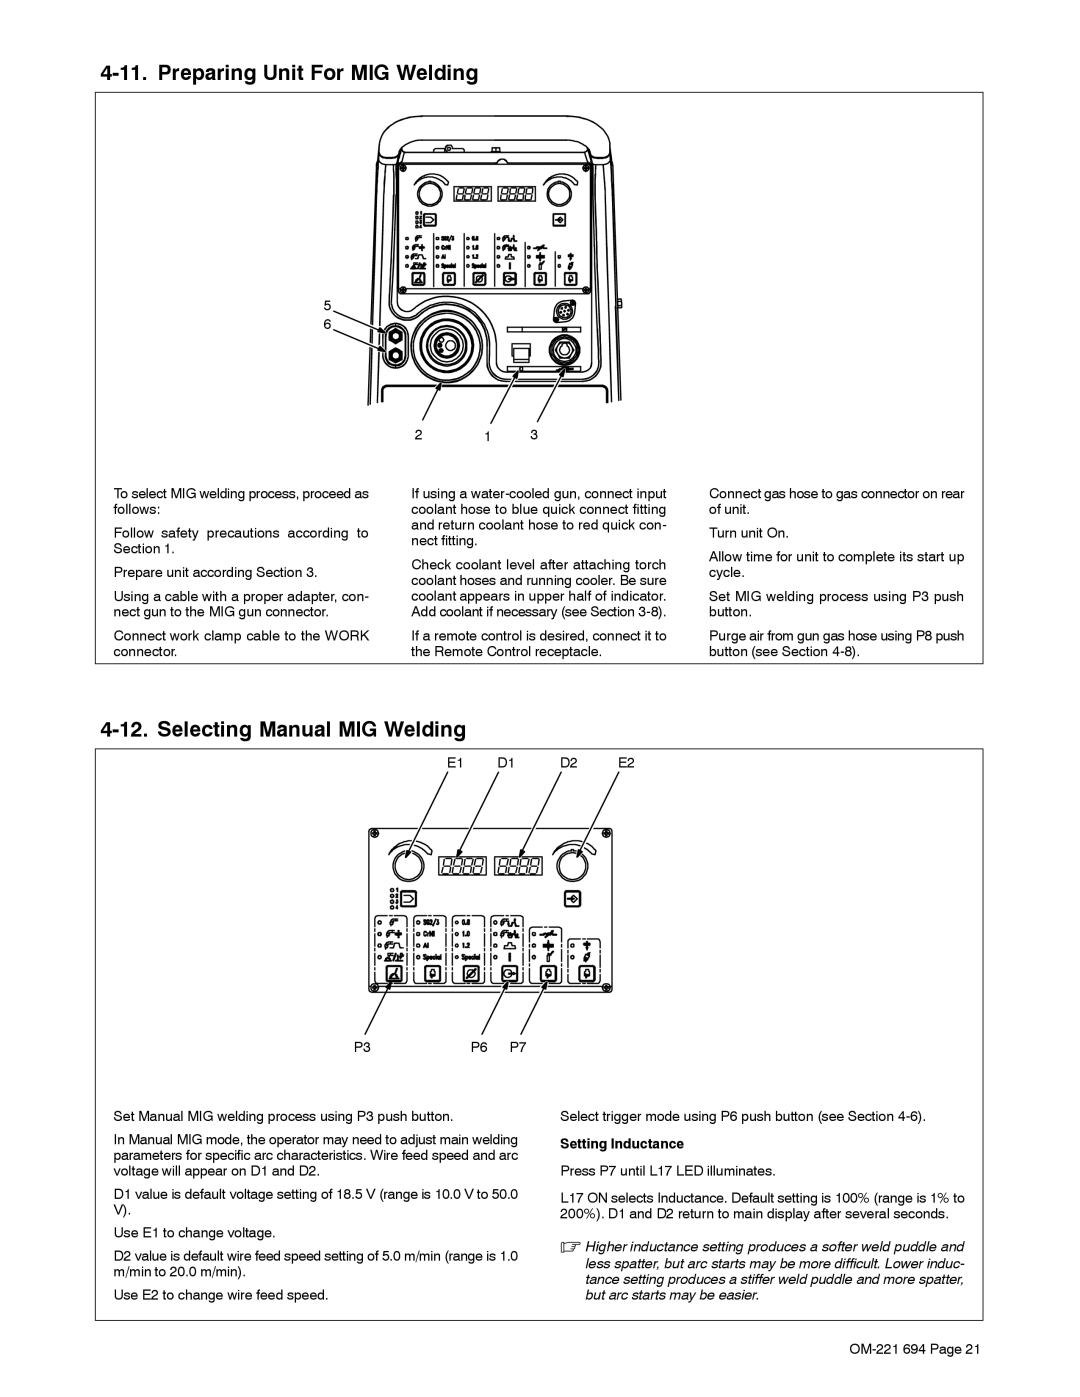 Miller Electric XMC 4000 manual Preparing Unit For MIG Welding, Selecting Manual MIG Welding, Setting Inductance 